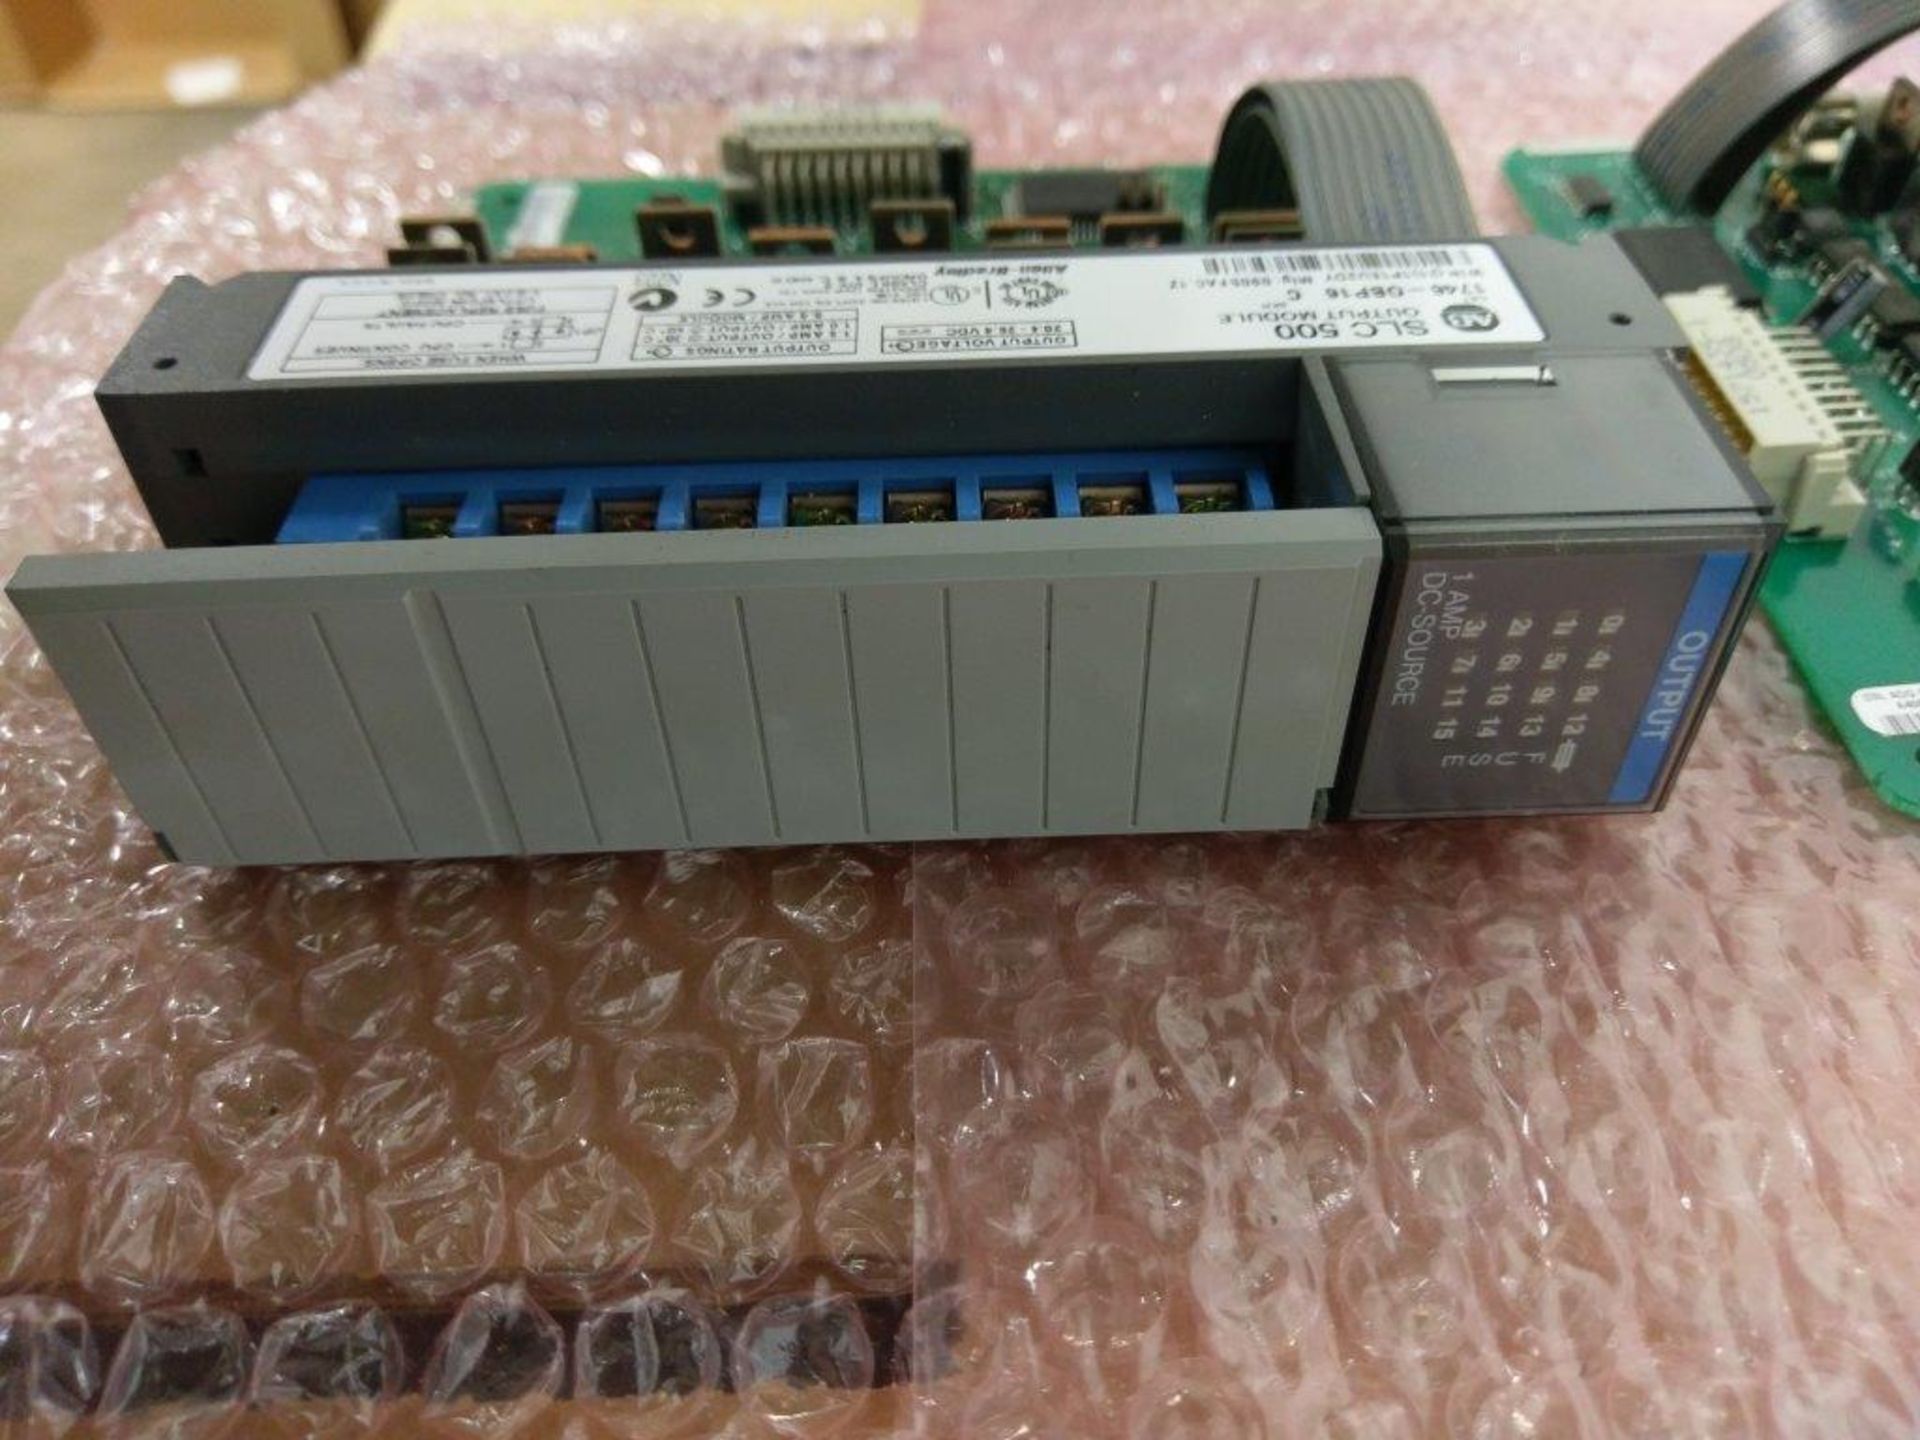 Lot of 4 Allen Bradley SLC500 Output Module Cat# 1746-OBP16 - Image 3 of 3